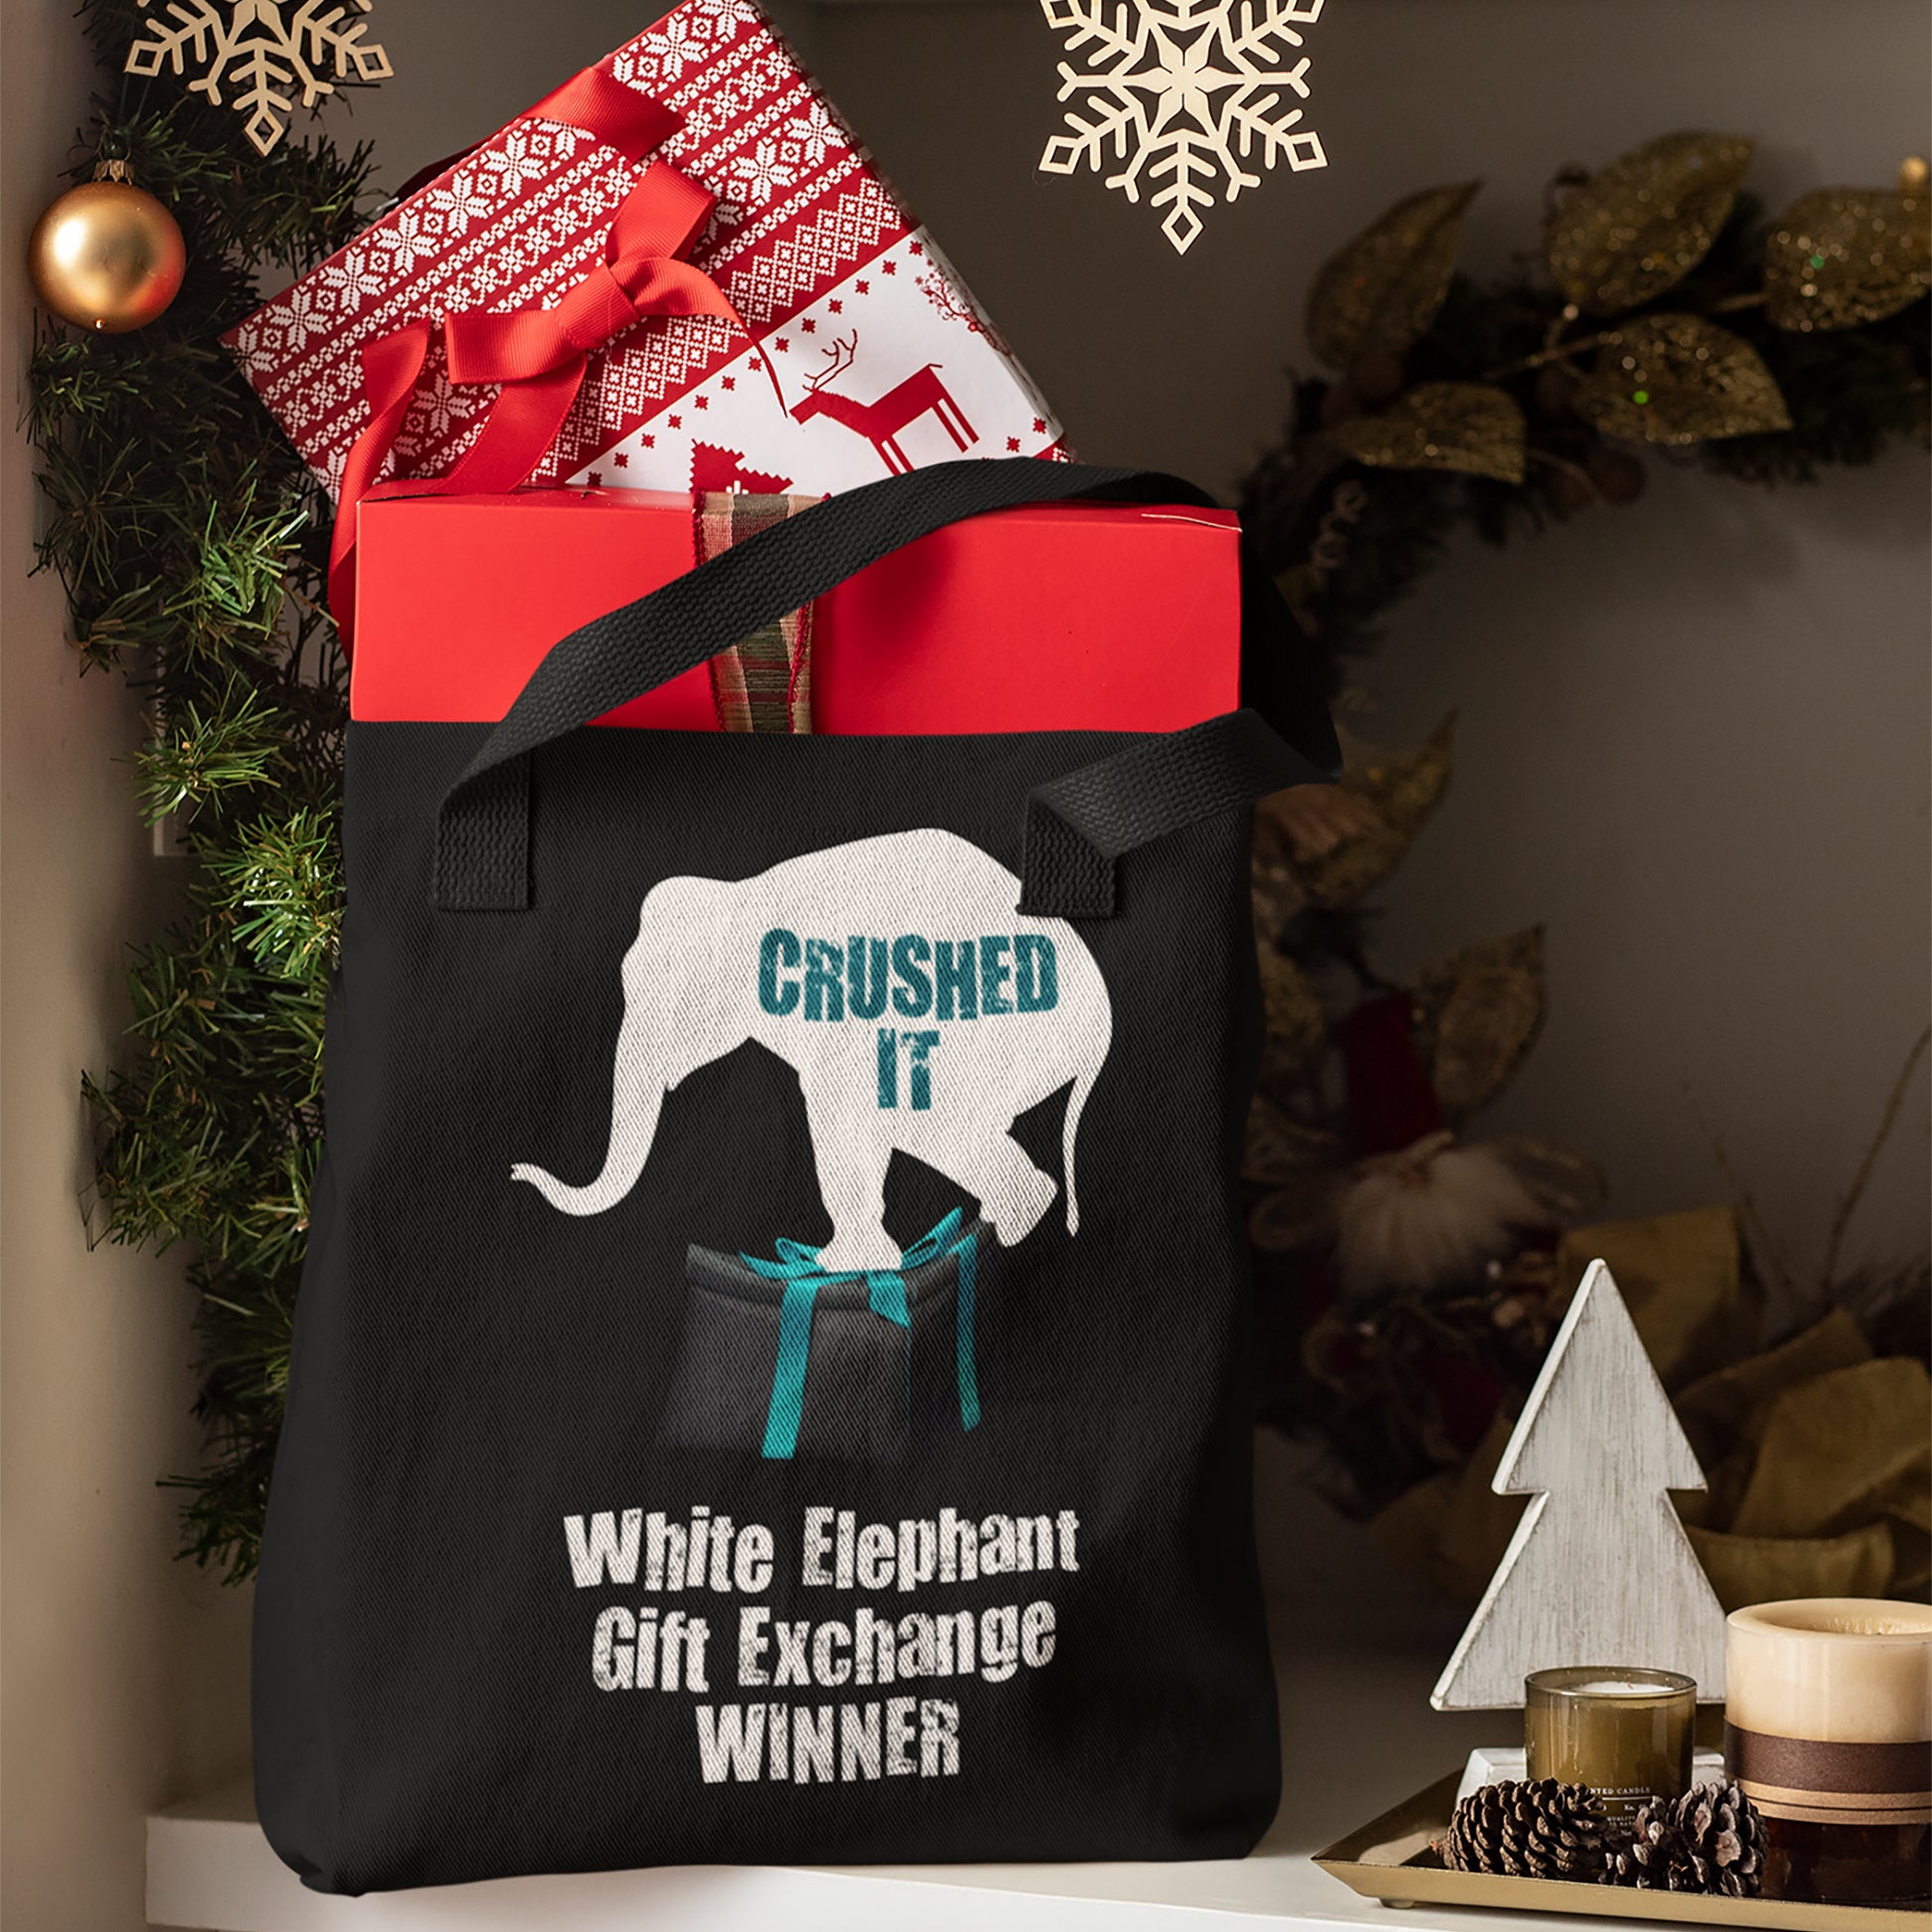 25 Best Hilarious White Elephant Gift Ideas  Best white elephant gifts, White  elephant gifts funny, White elephant gifts